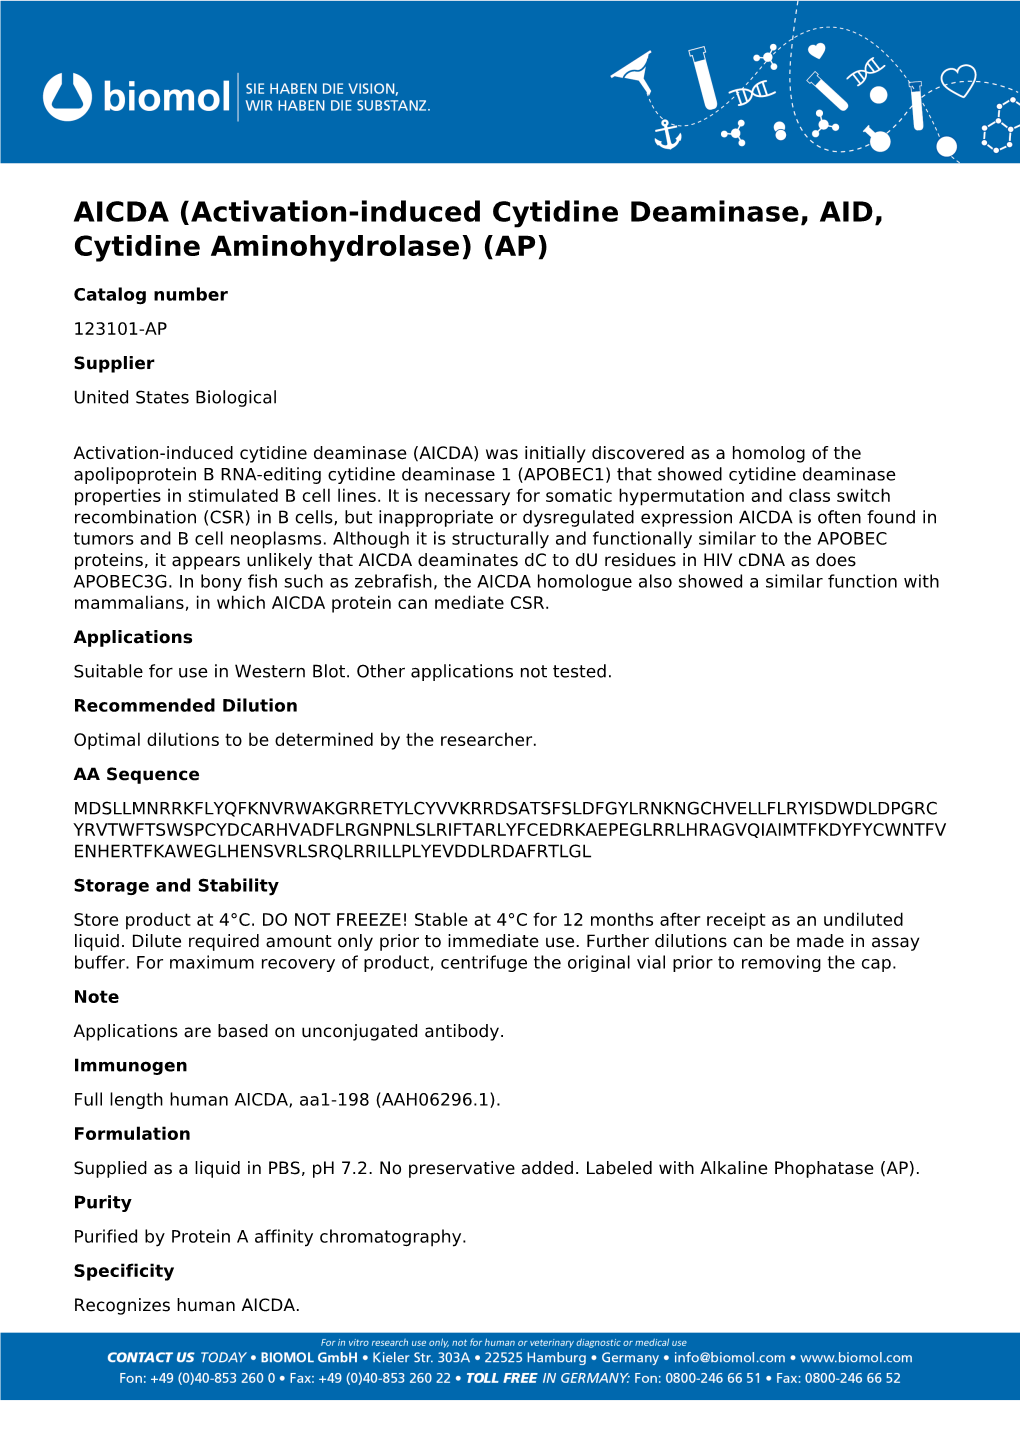 AICDA (Activation-Induced Cytidine Deaminase, AID, Cytidine Aminohydrolase) (AP)